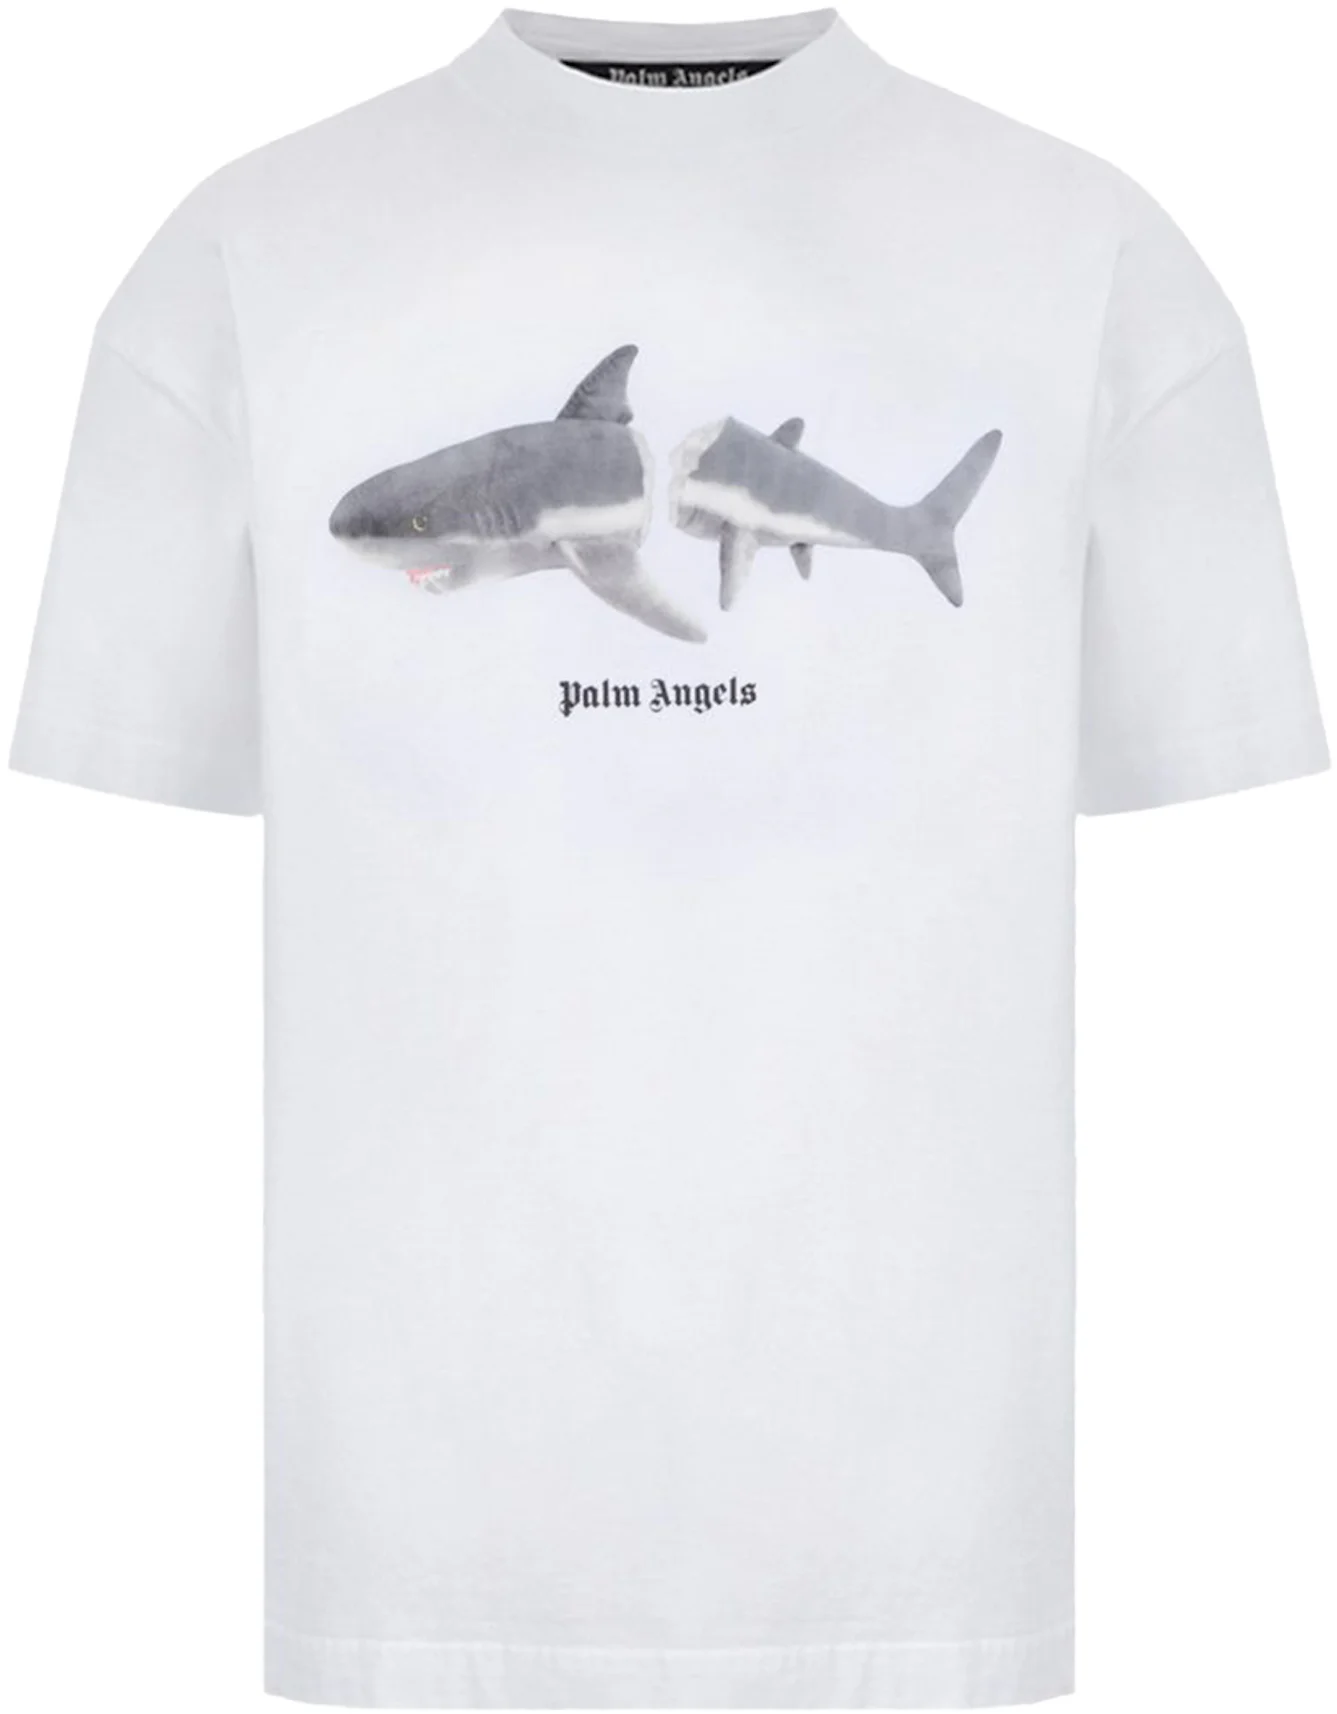 Black Broken Shark Classic T-Shirt by Palm Angels on Sale